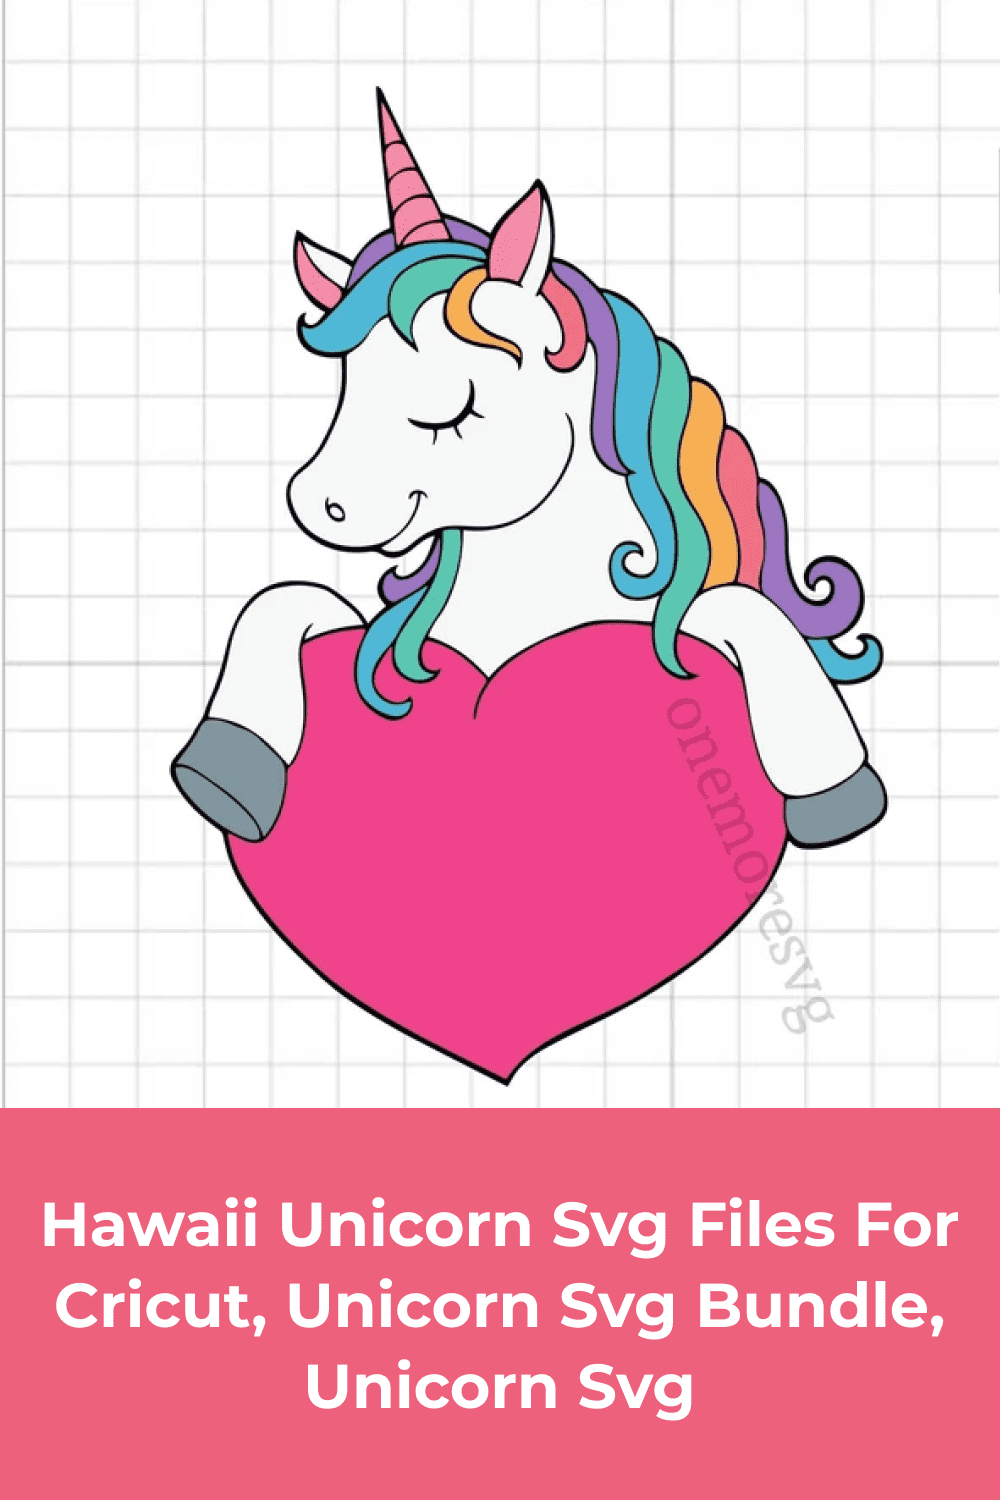 Kawaii Unicorn SVG Files for Cricut.